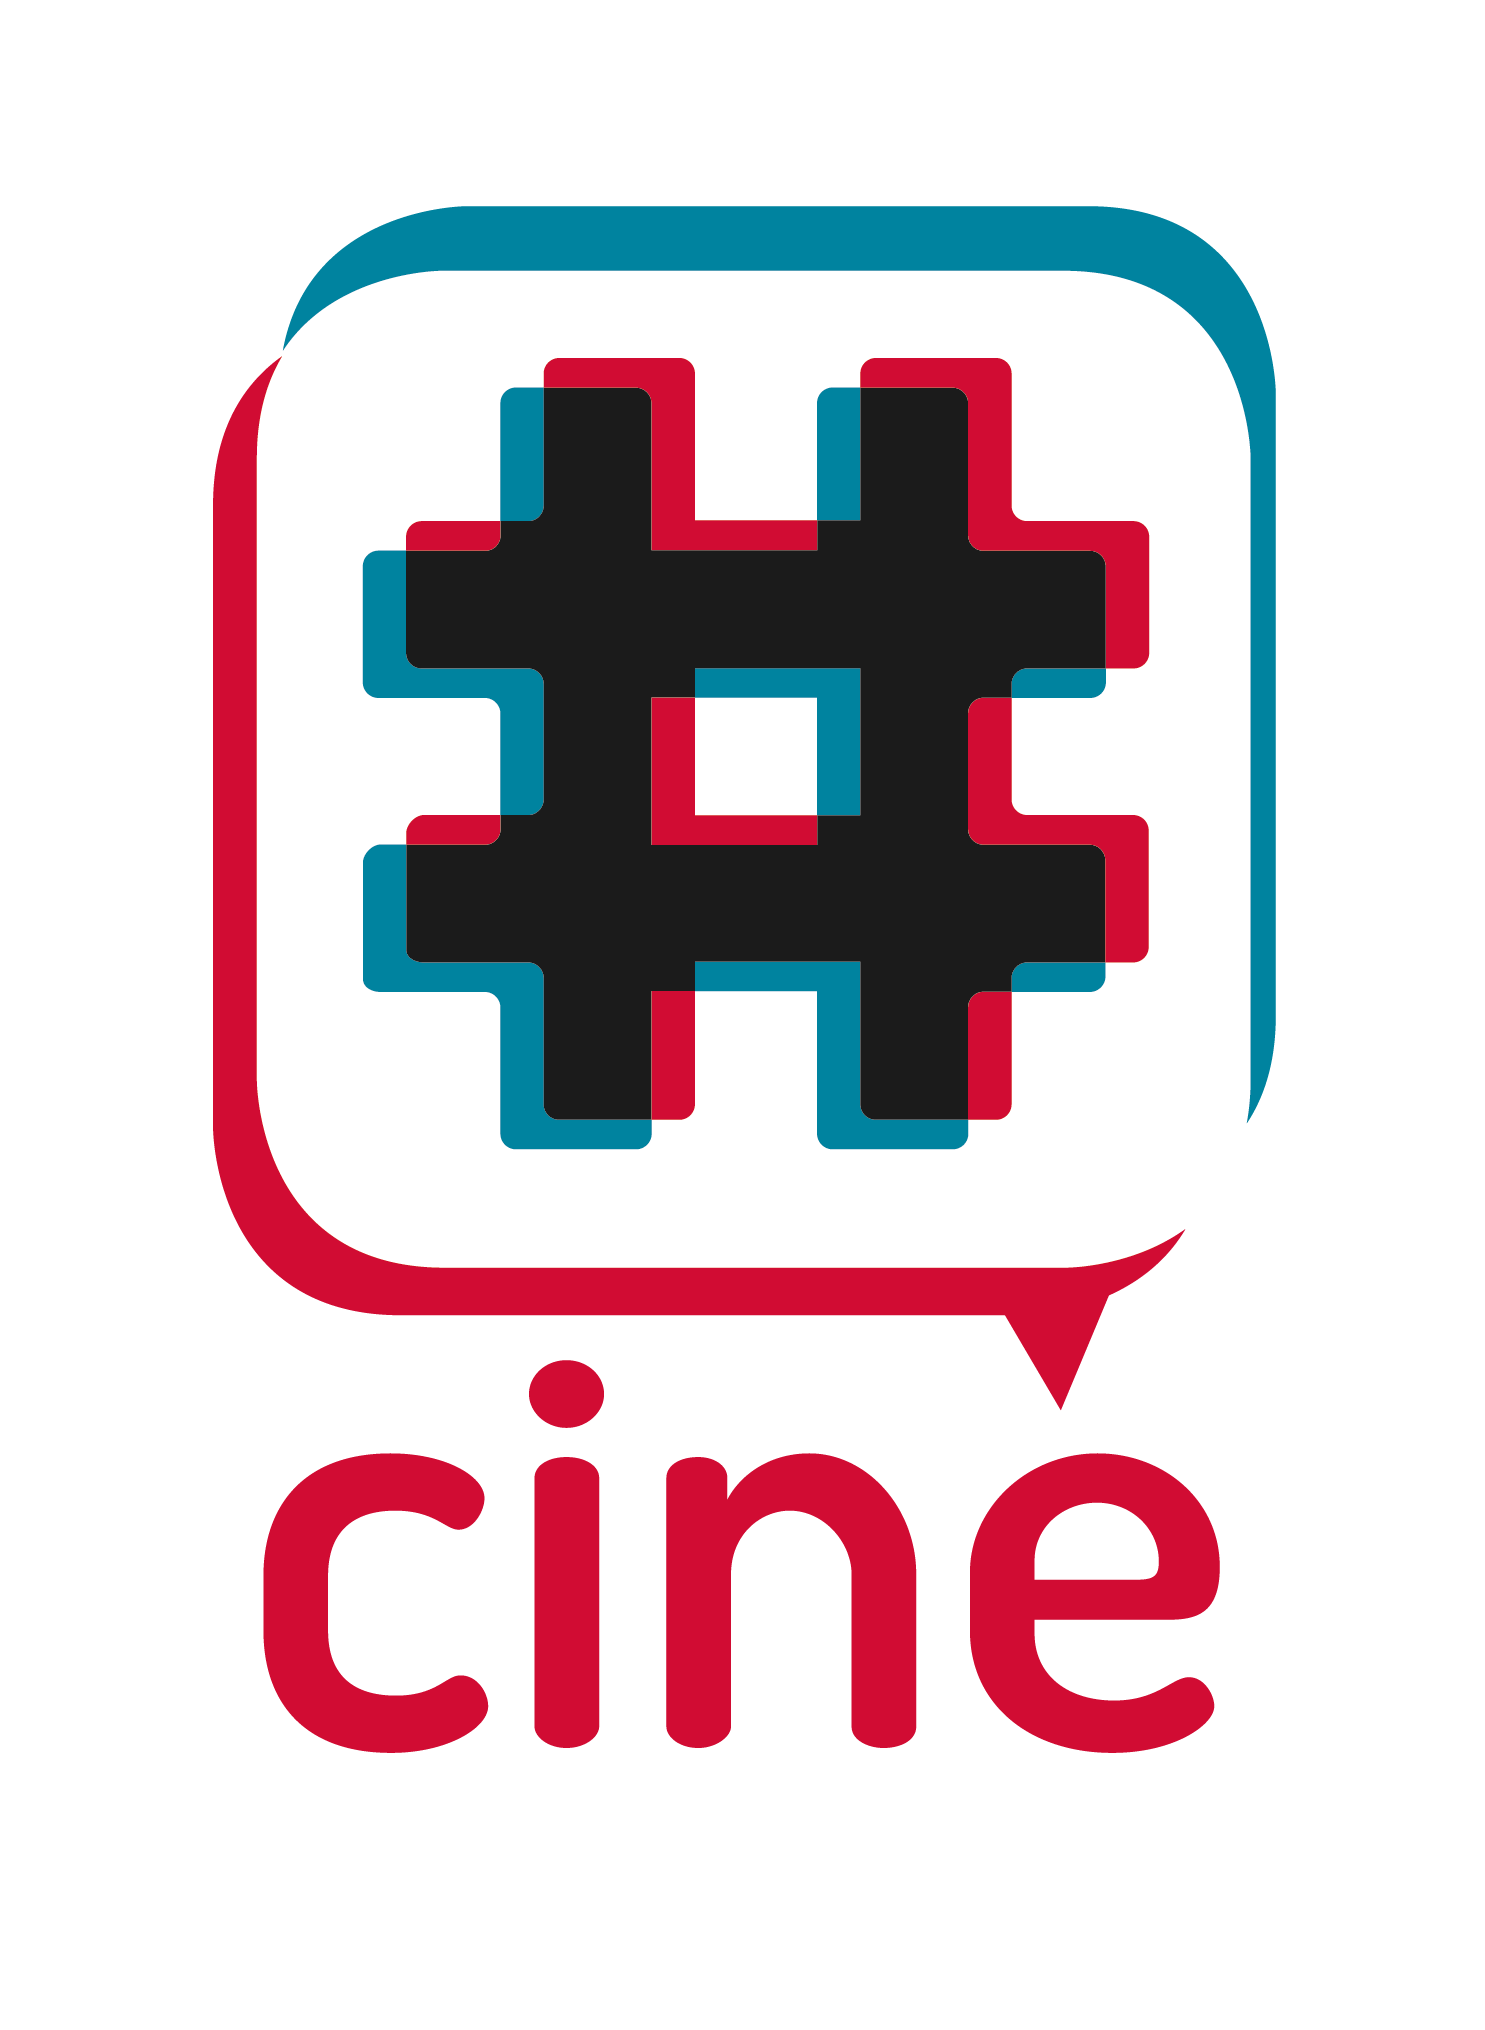 Logo #cine Fribourg